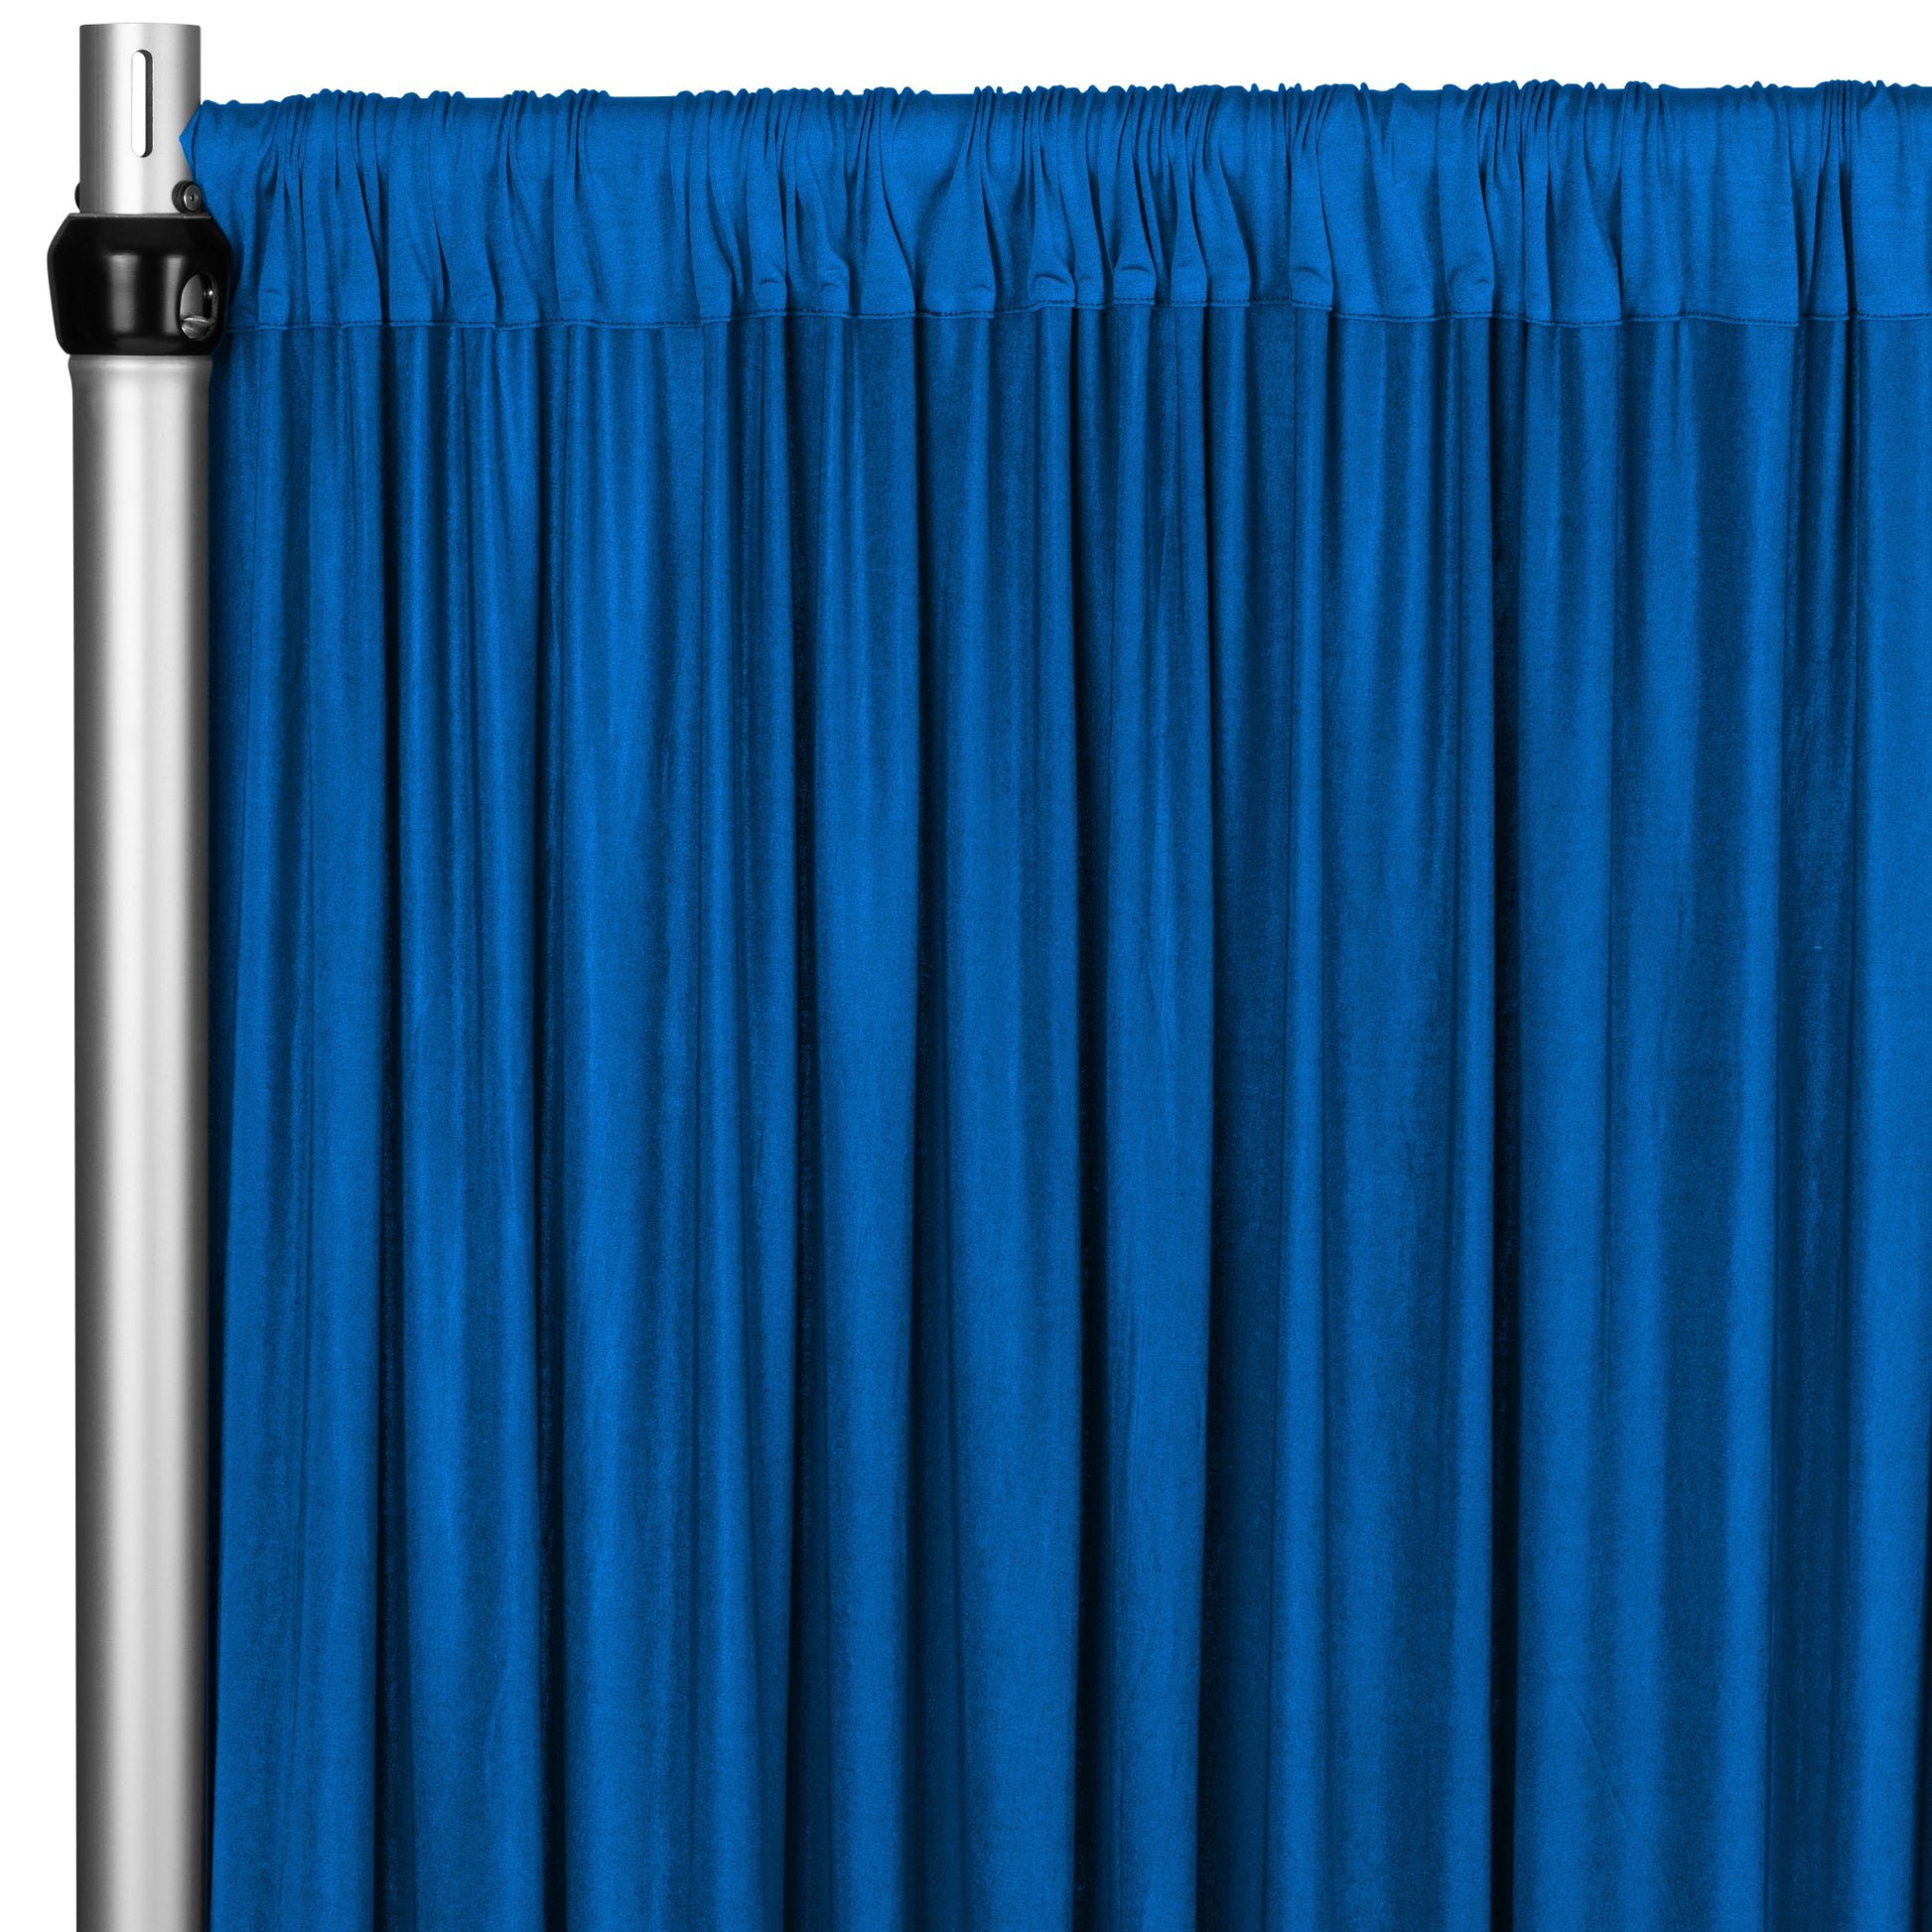 Spandex 4-way Stretch Backdrop Drape Curtain 18ft H x 60" W - Royal Blue